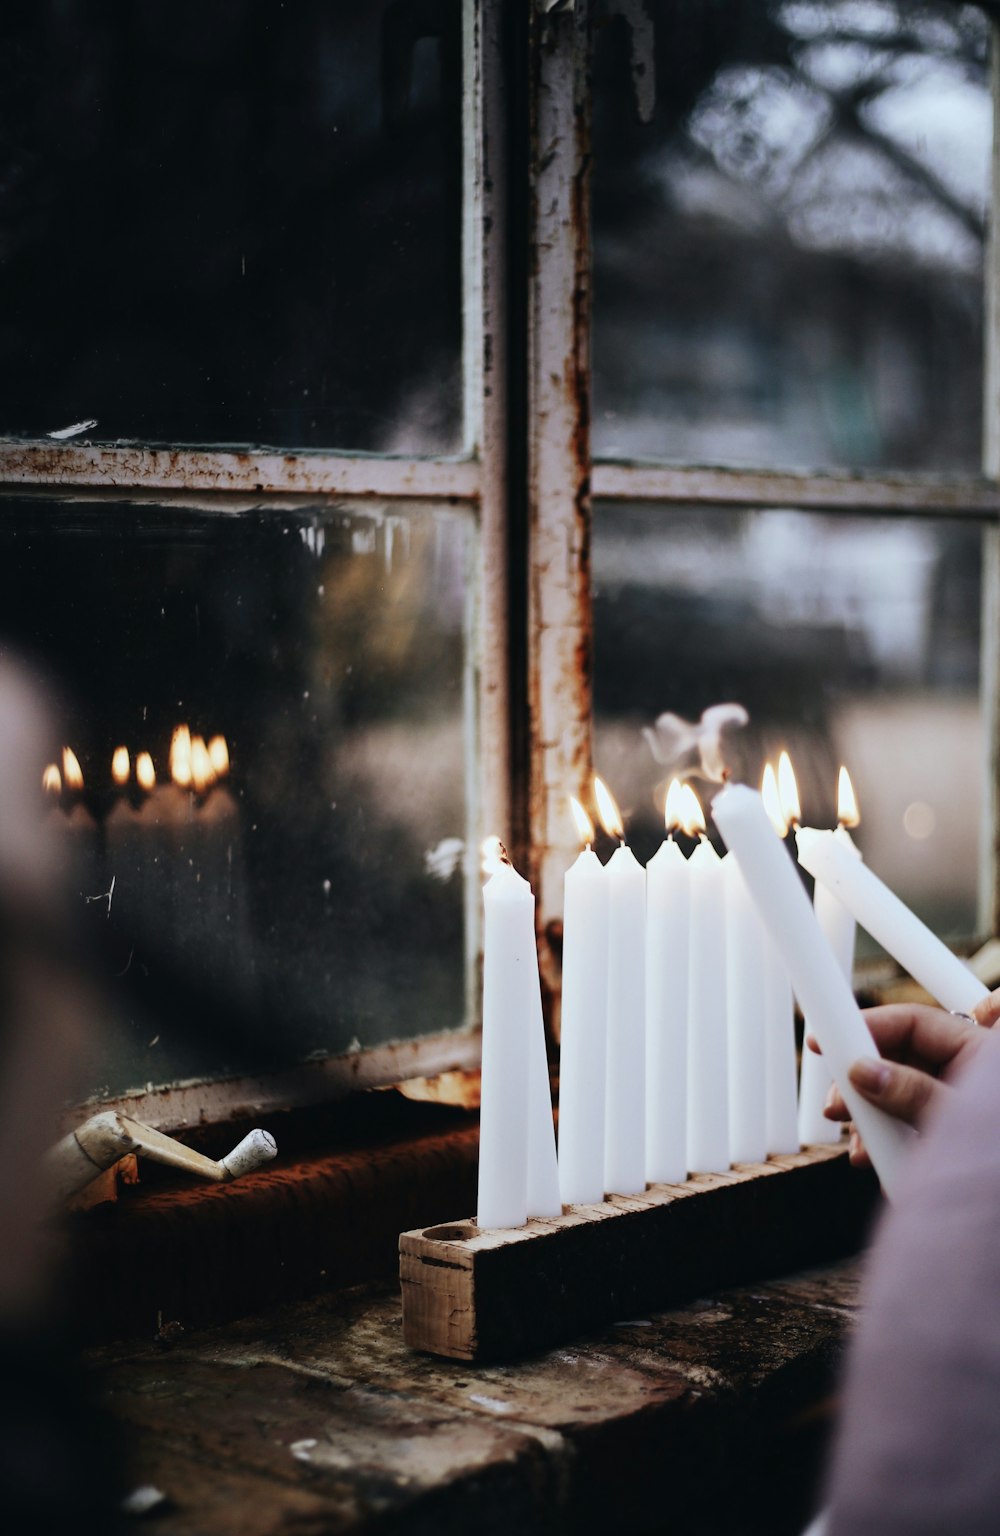 person lighting white candlesticks in a rack near glass windowpane